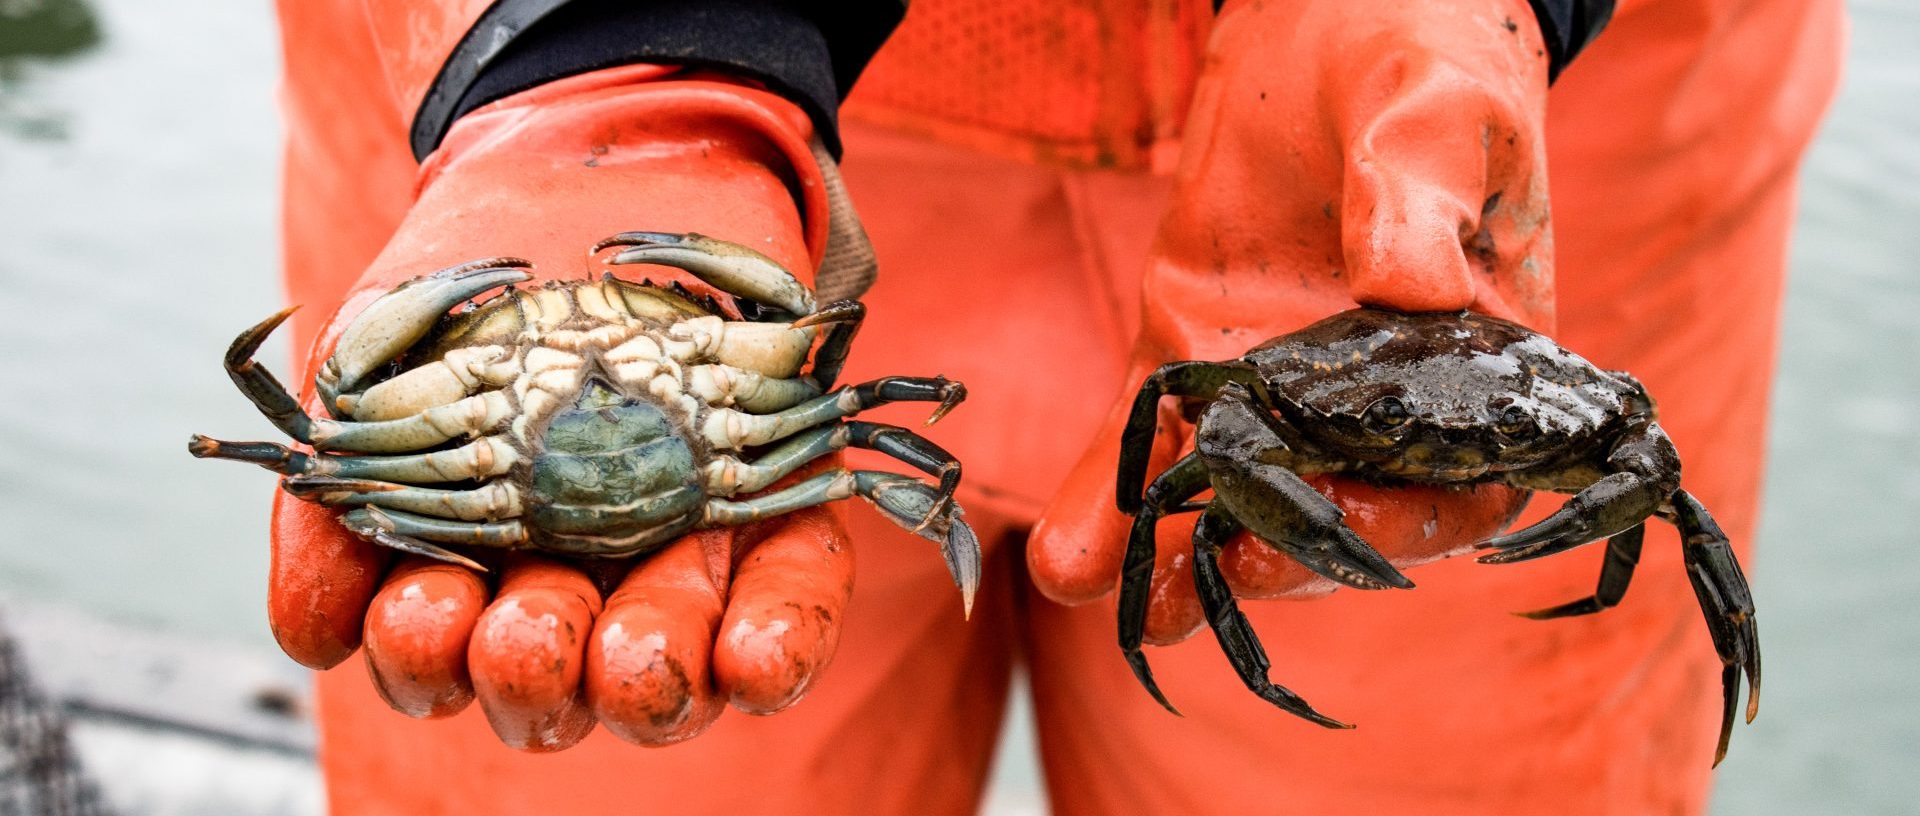 Fight in “brushfire mode” against invasive crab